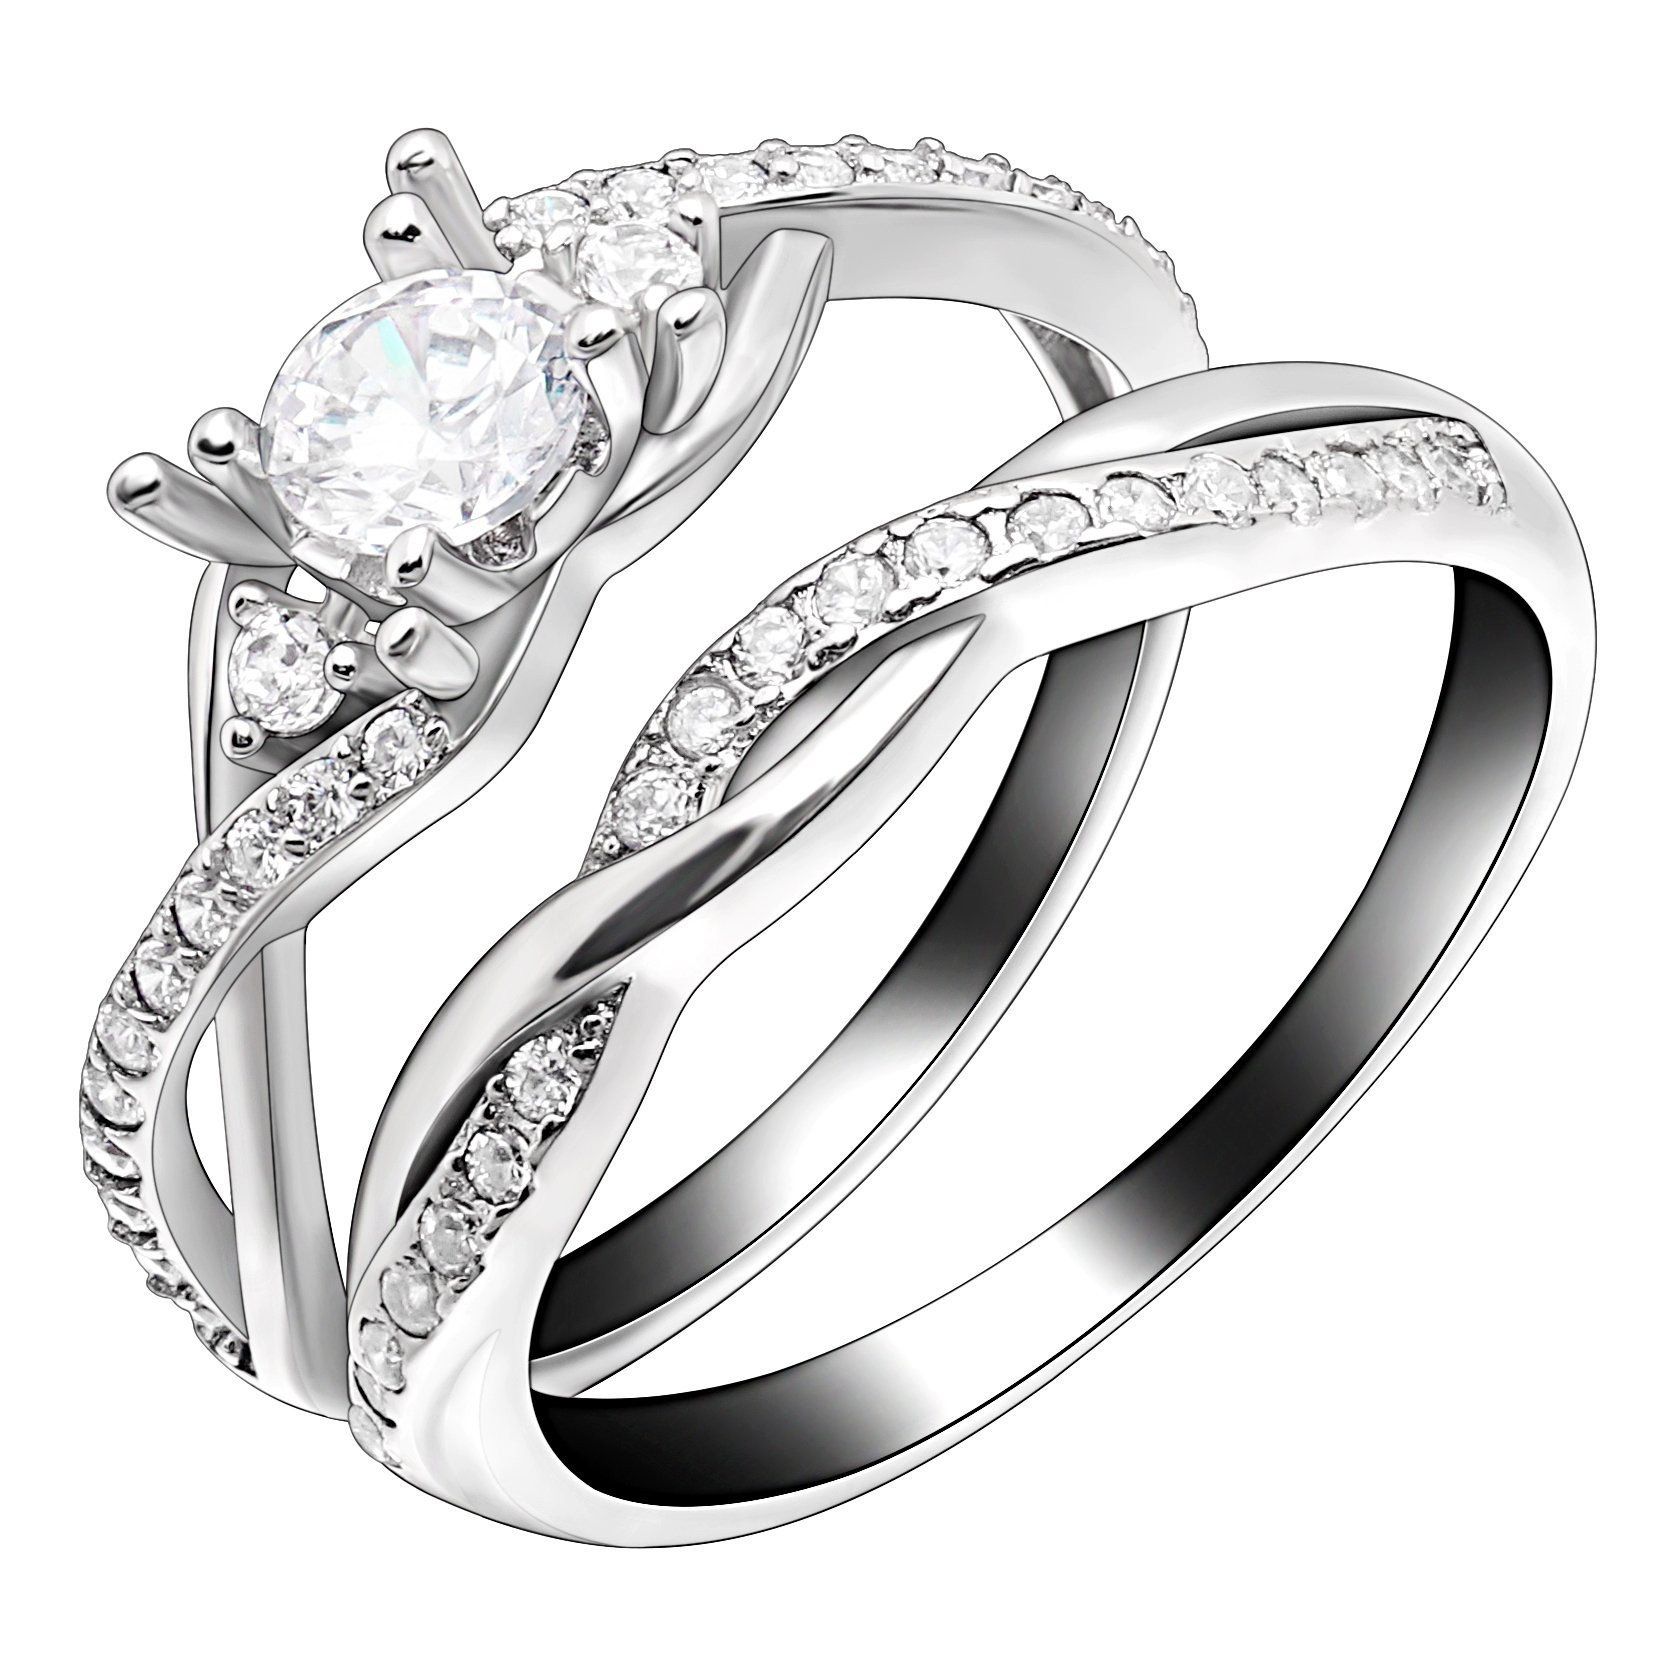 Walmart Wedding Ring Sets
 Contessa Engagement and Wedding Band Ring Set 925 Sterling